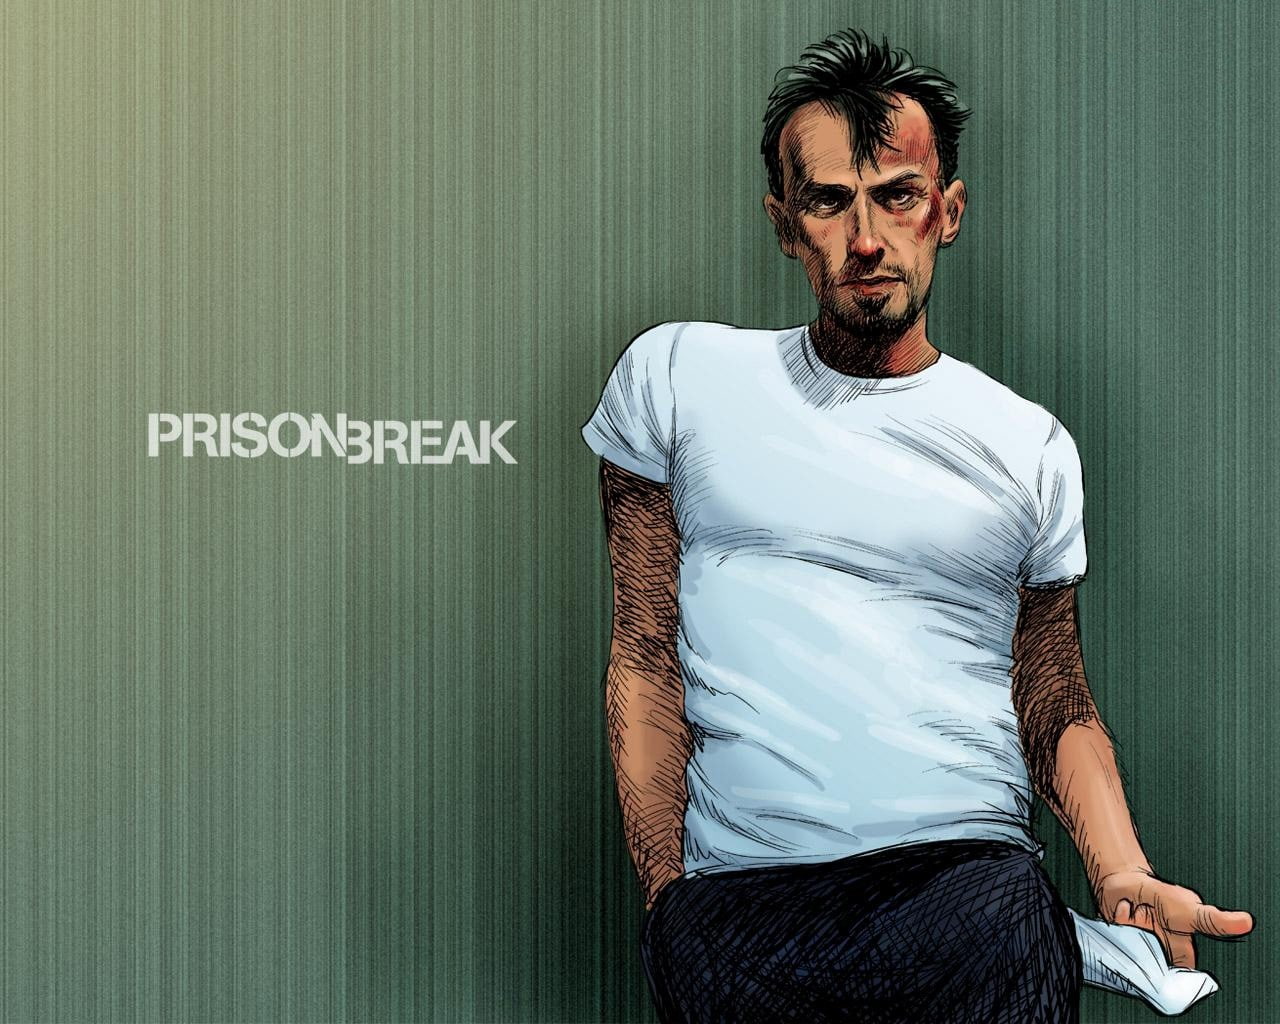 Prison Break, theodore bagwell, t-bag, t bag, one person, men